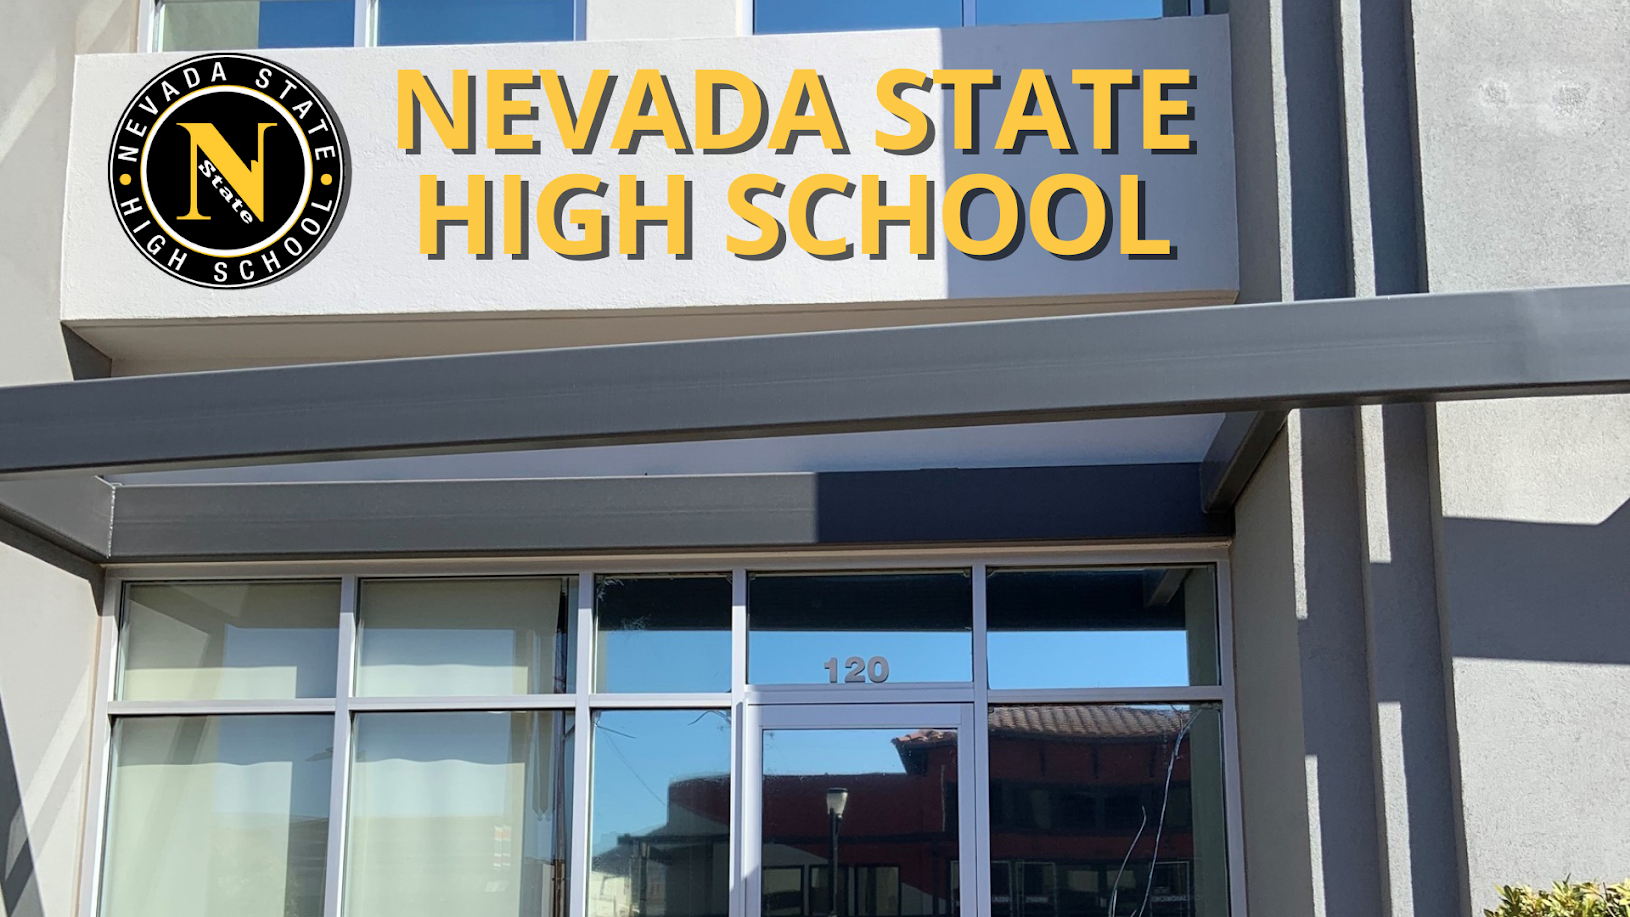 Nevada State High School - Henderson: Downtown